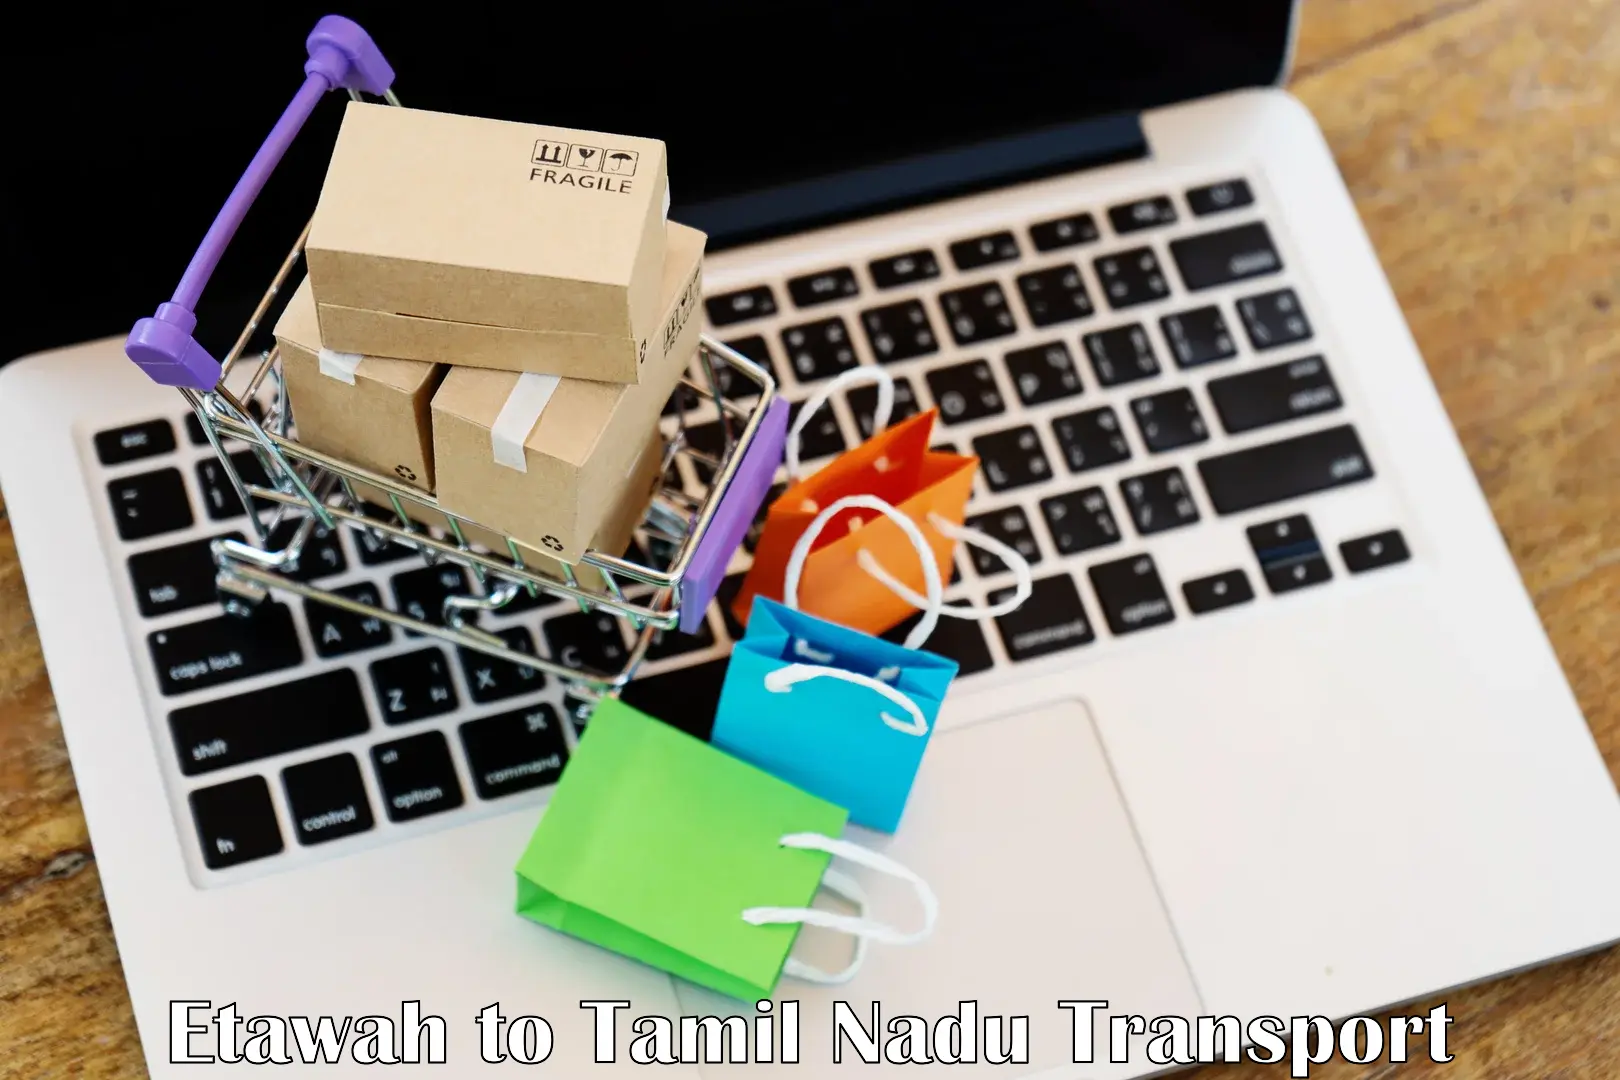 Shipping partner Etawah to Tamil Nadu